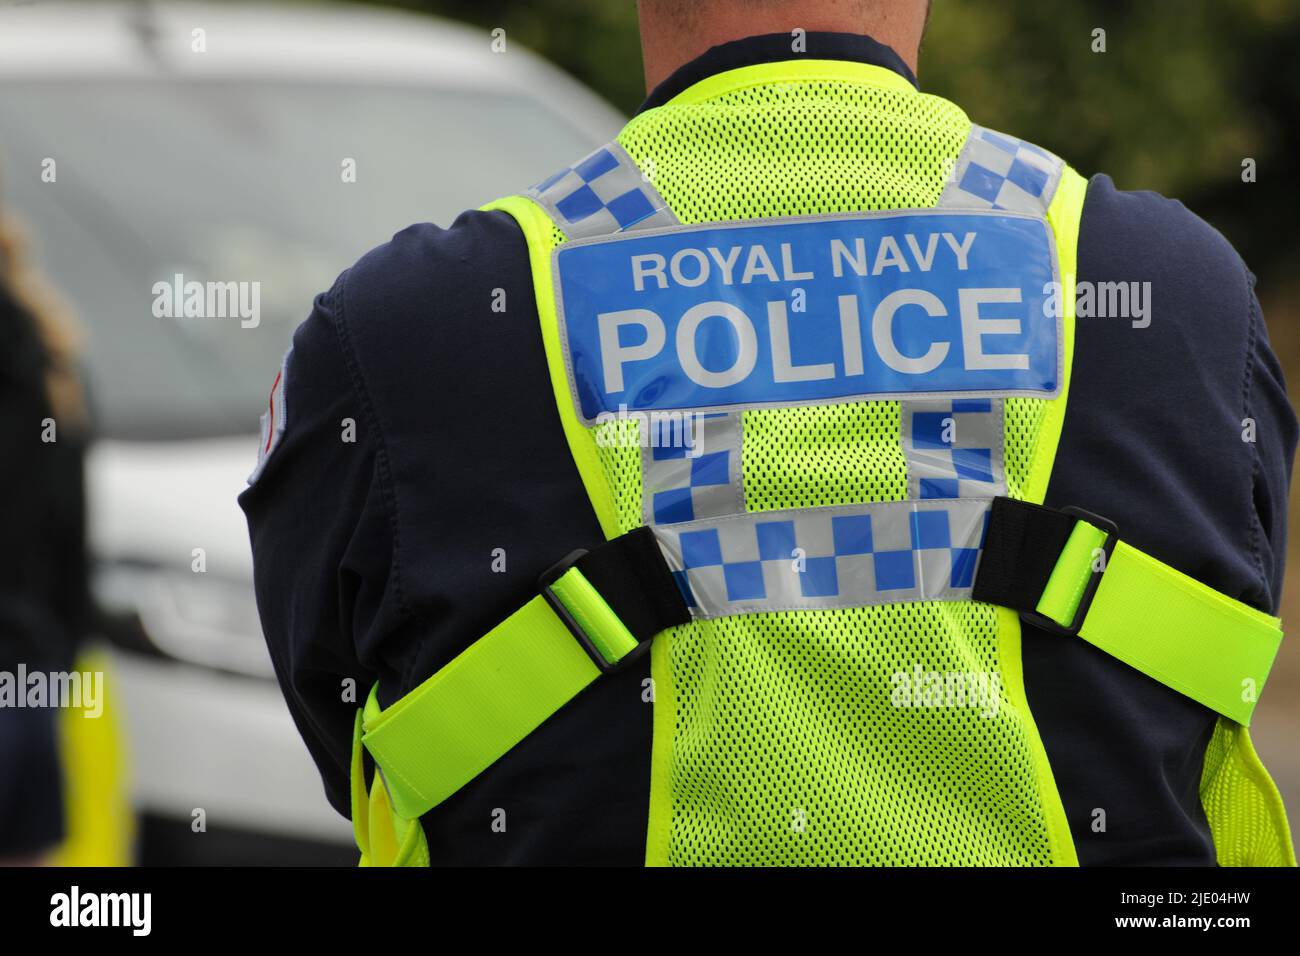 Royal Navy police regulator Stock Photo